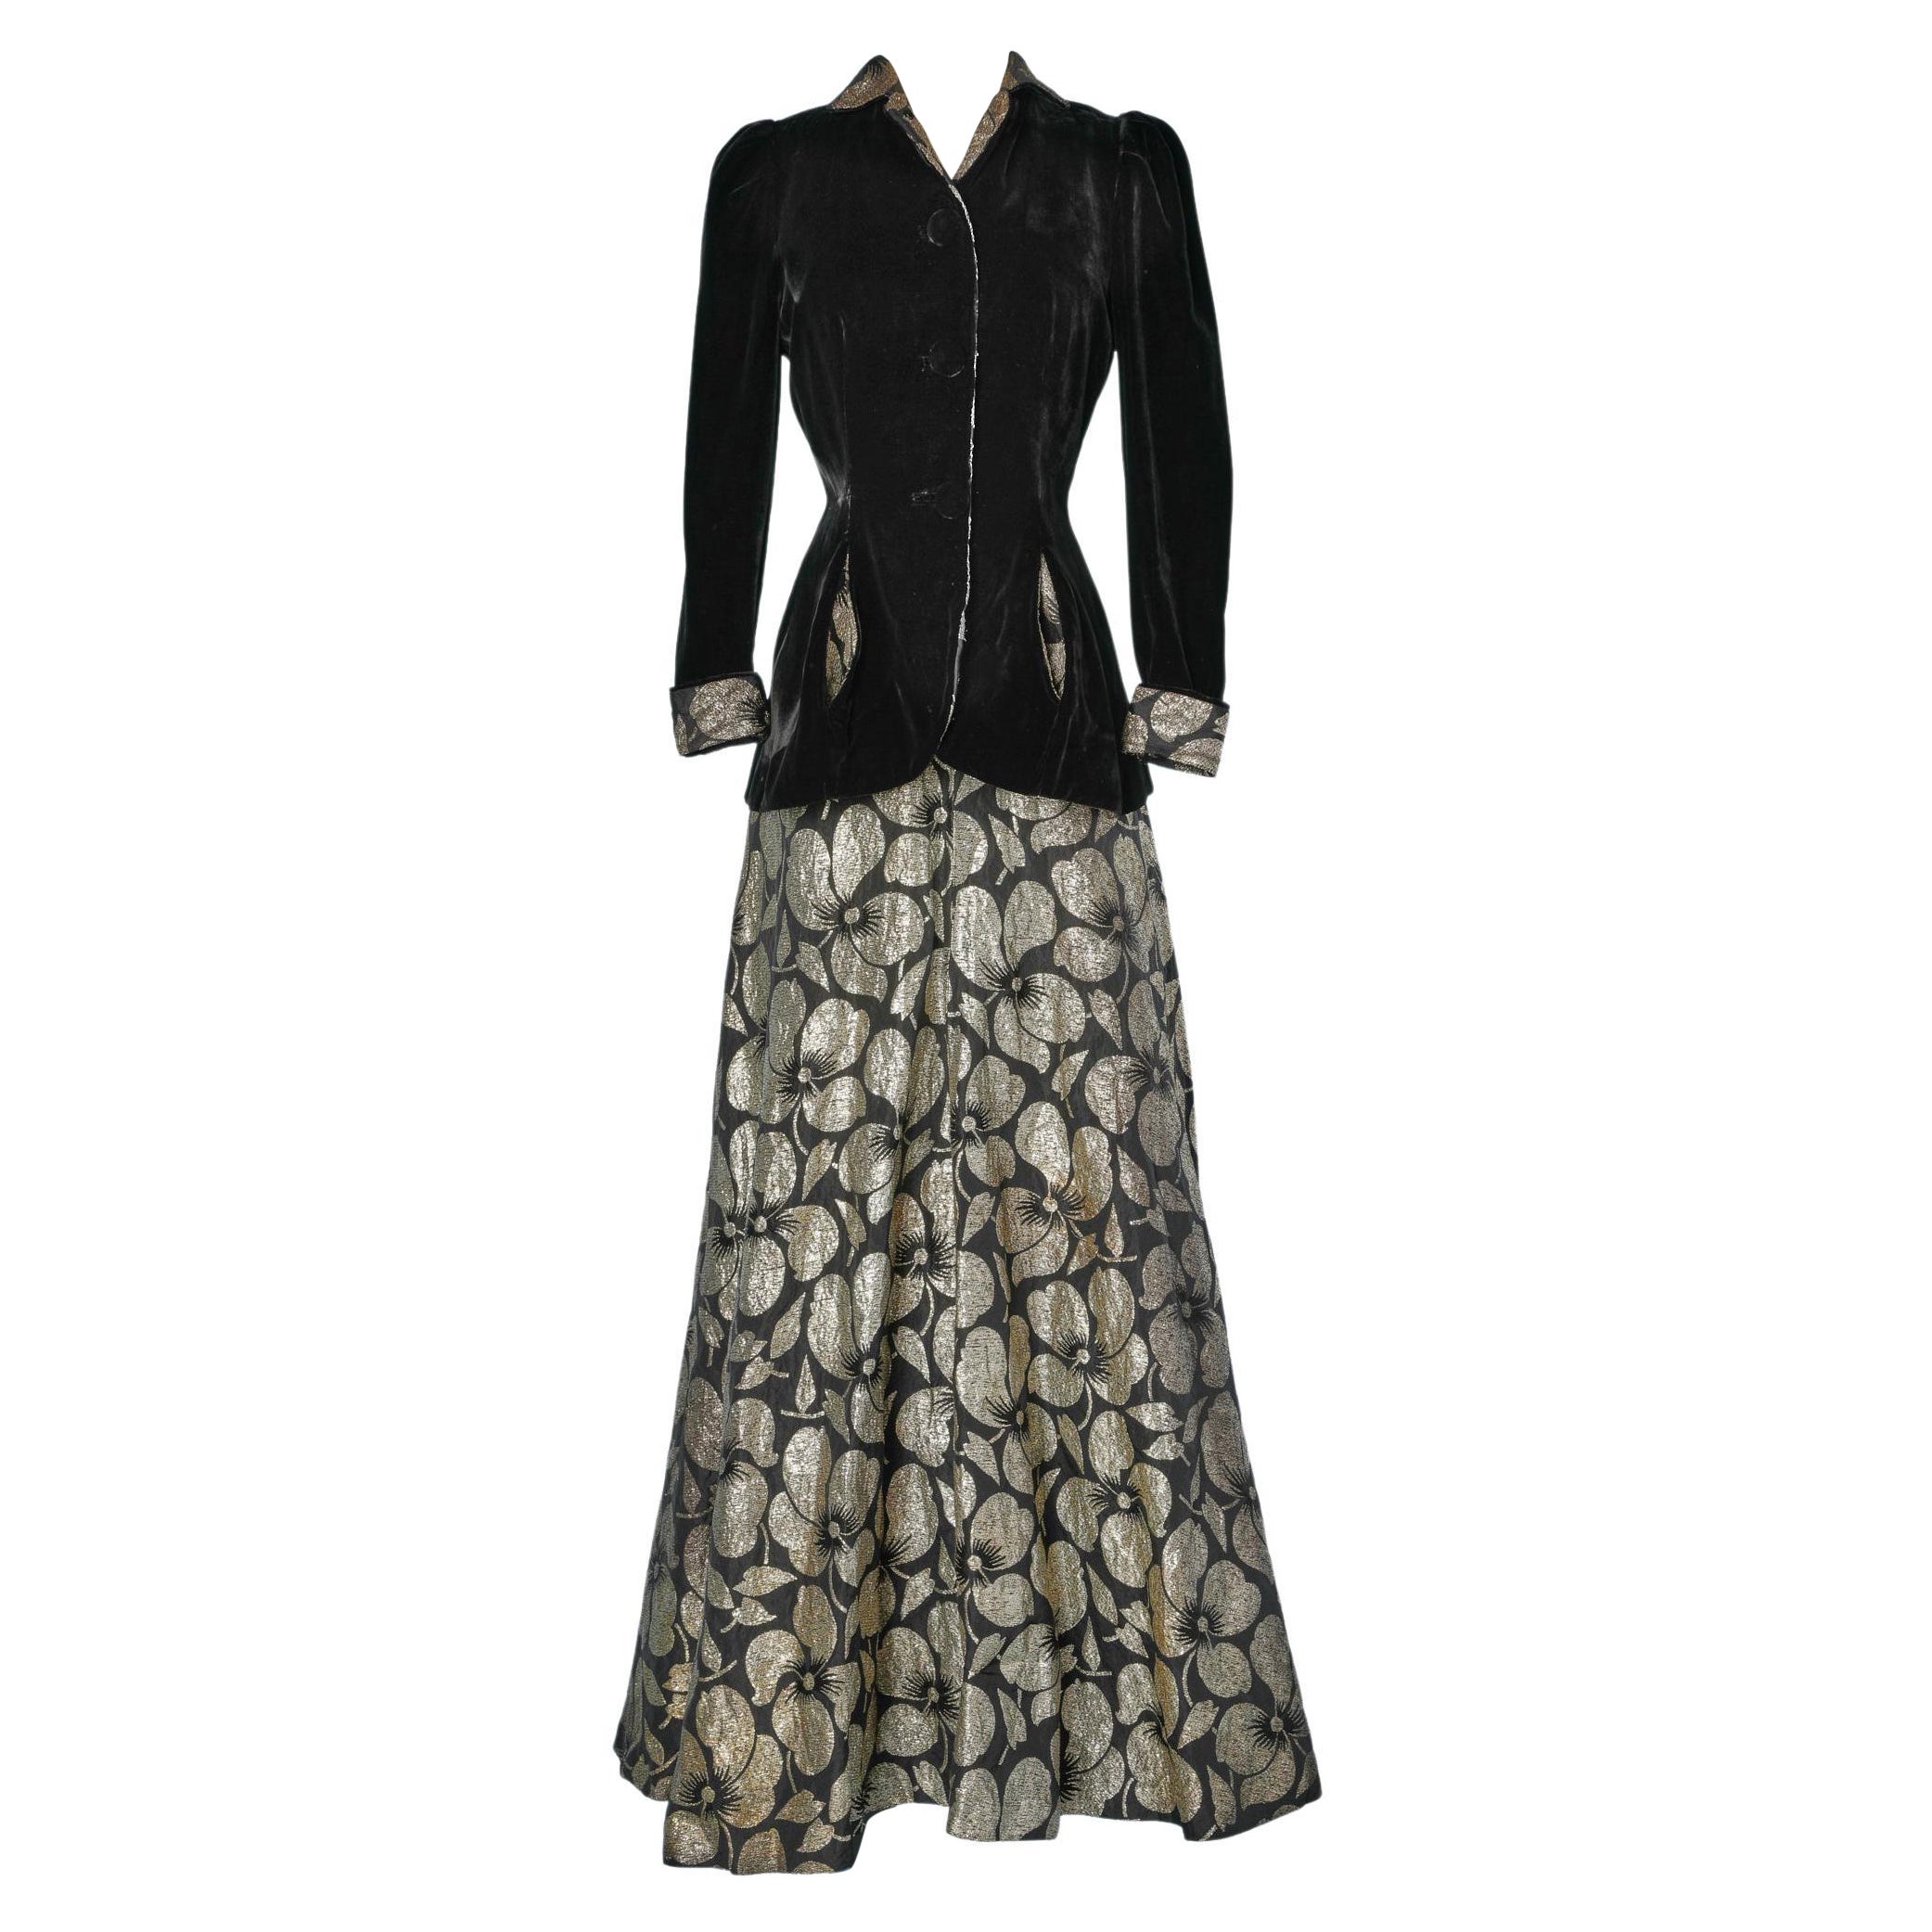 Evening long skirt-suit in black velvet and gold lurex brocade dress For Sale